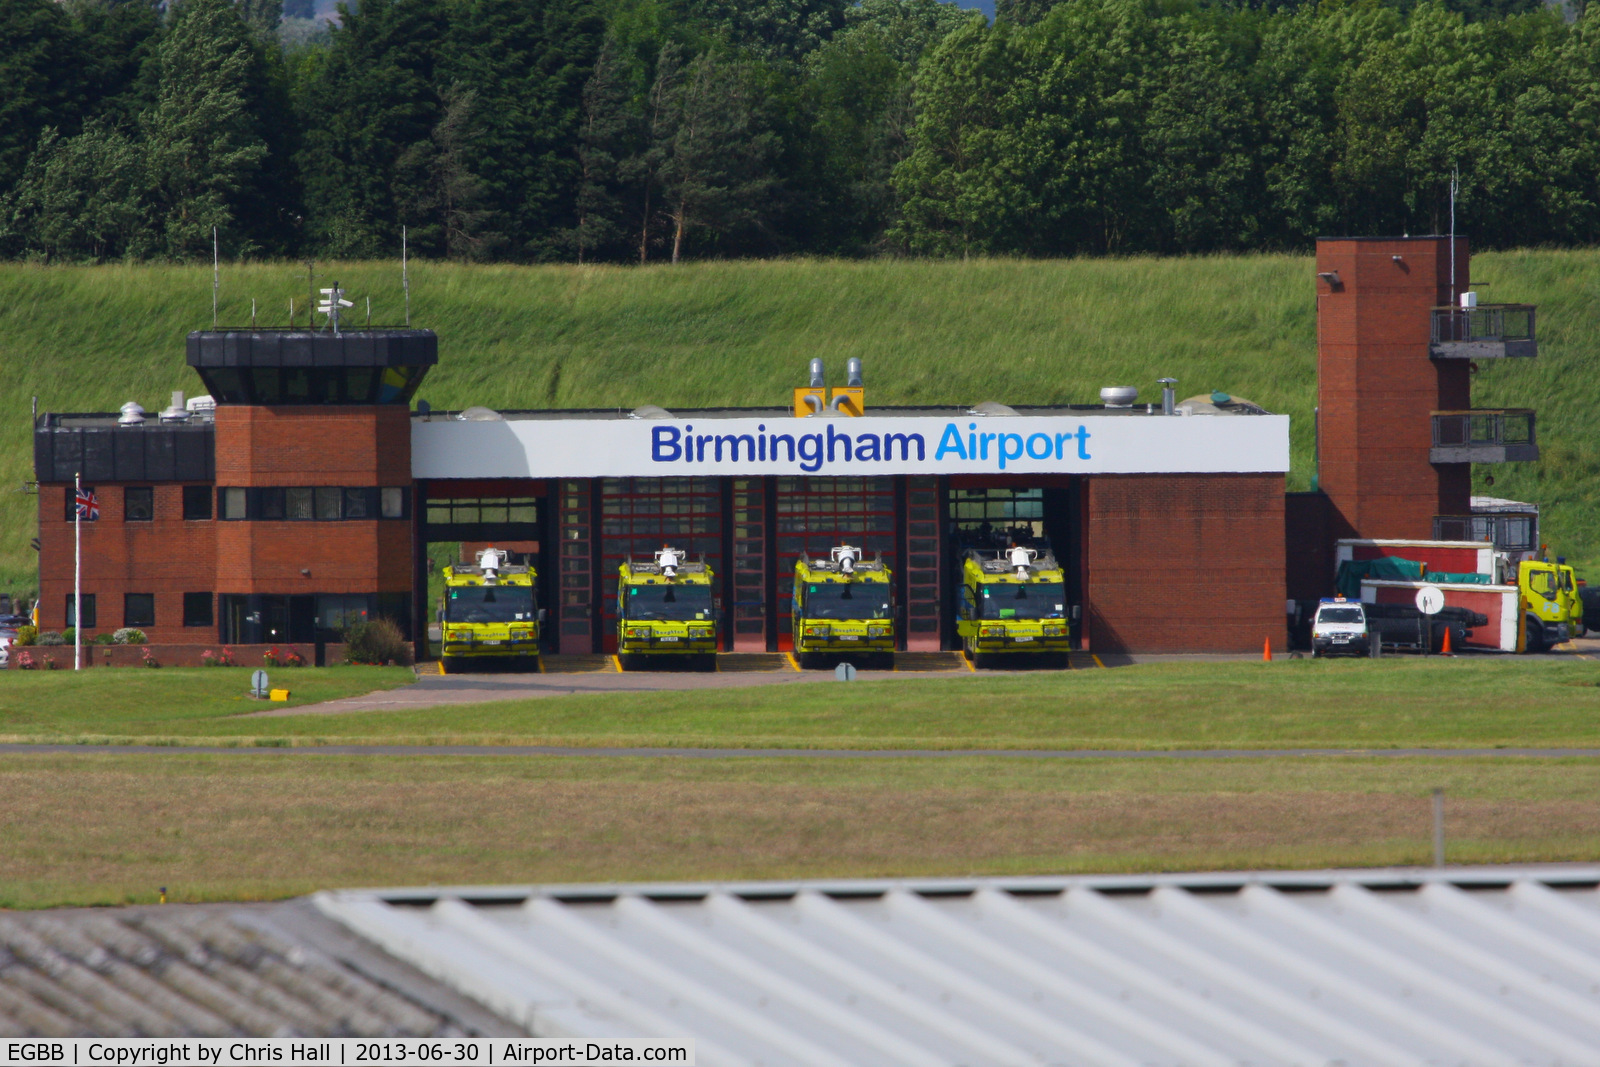 Birmingham International Airport, Birmingham, England United Kingdom (EGBB) - new sign on the Birmingham fire station